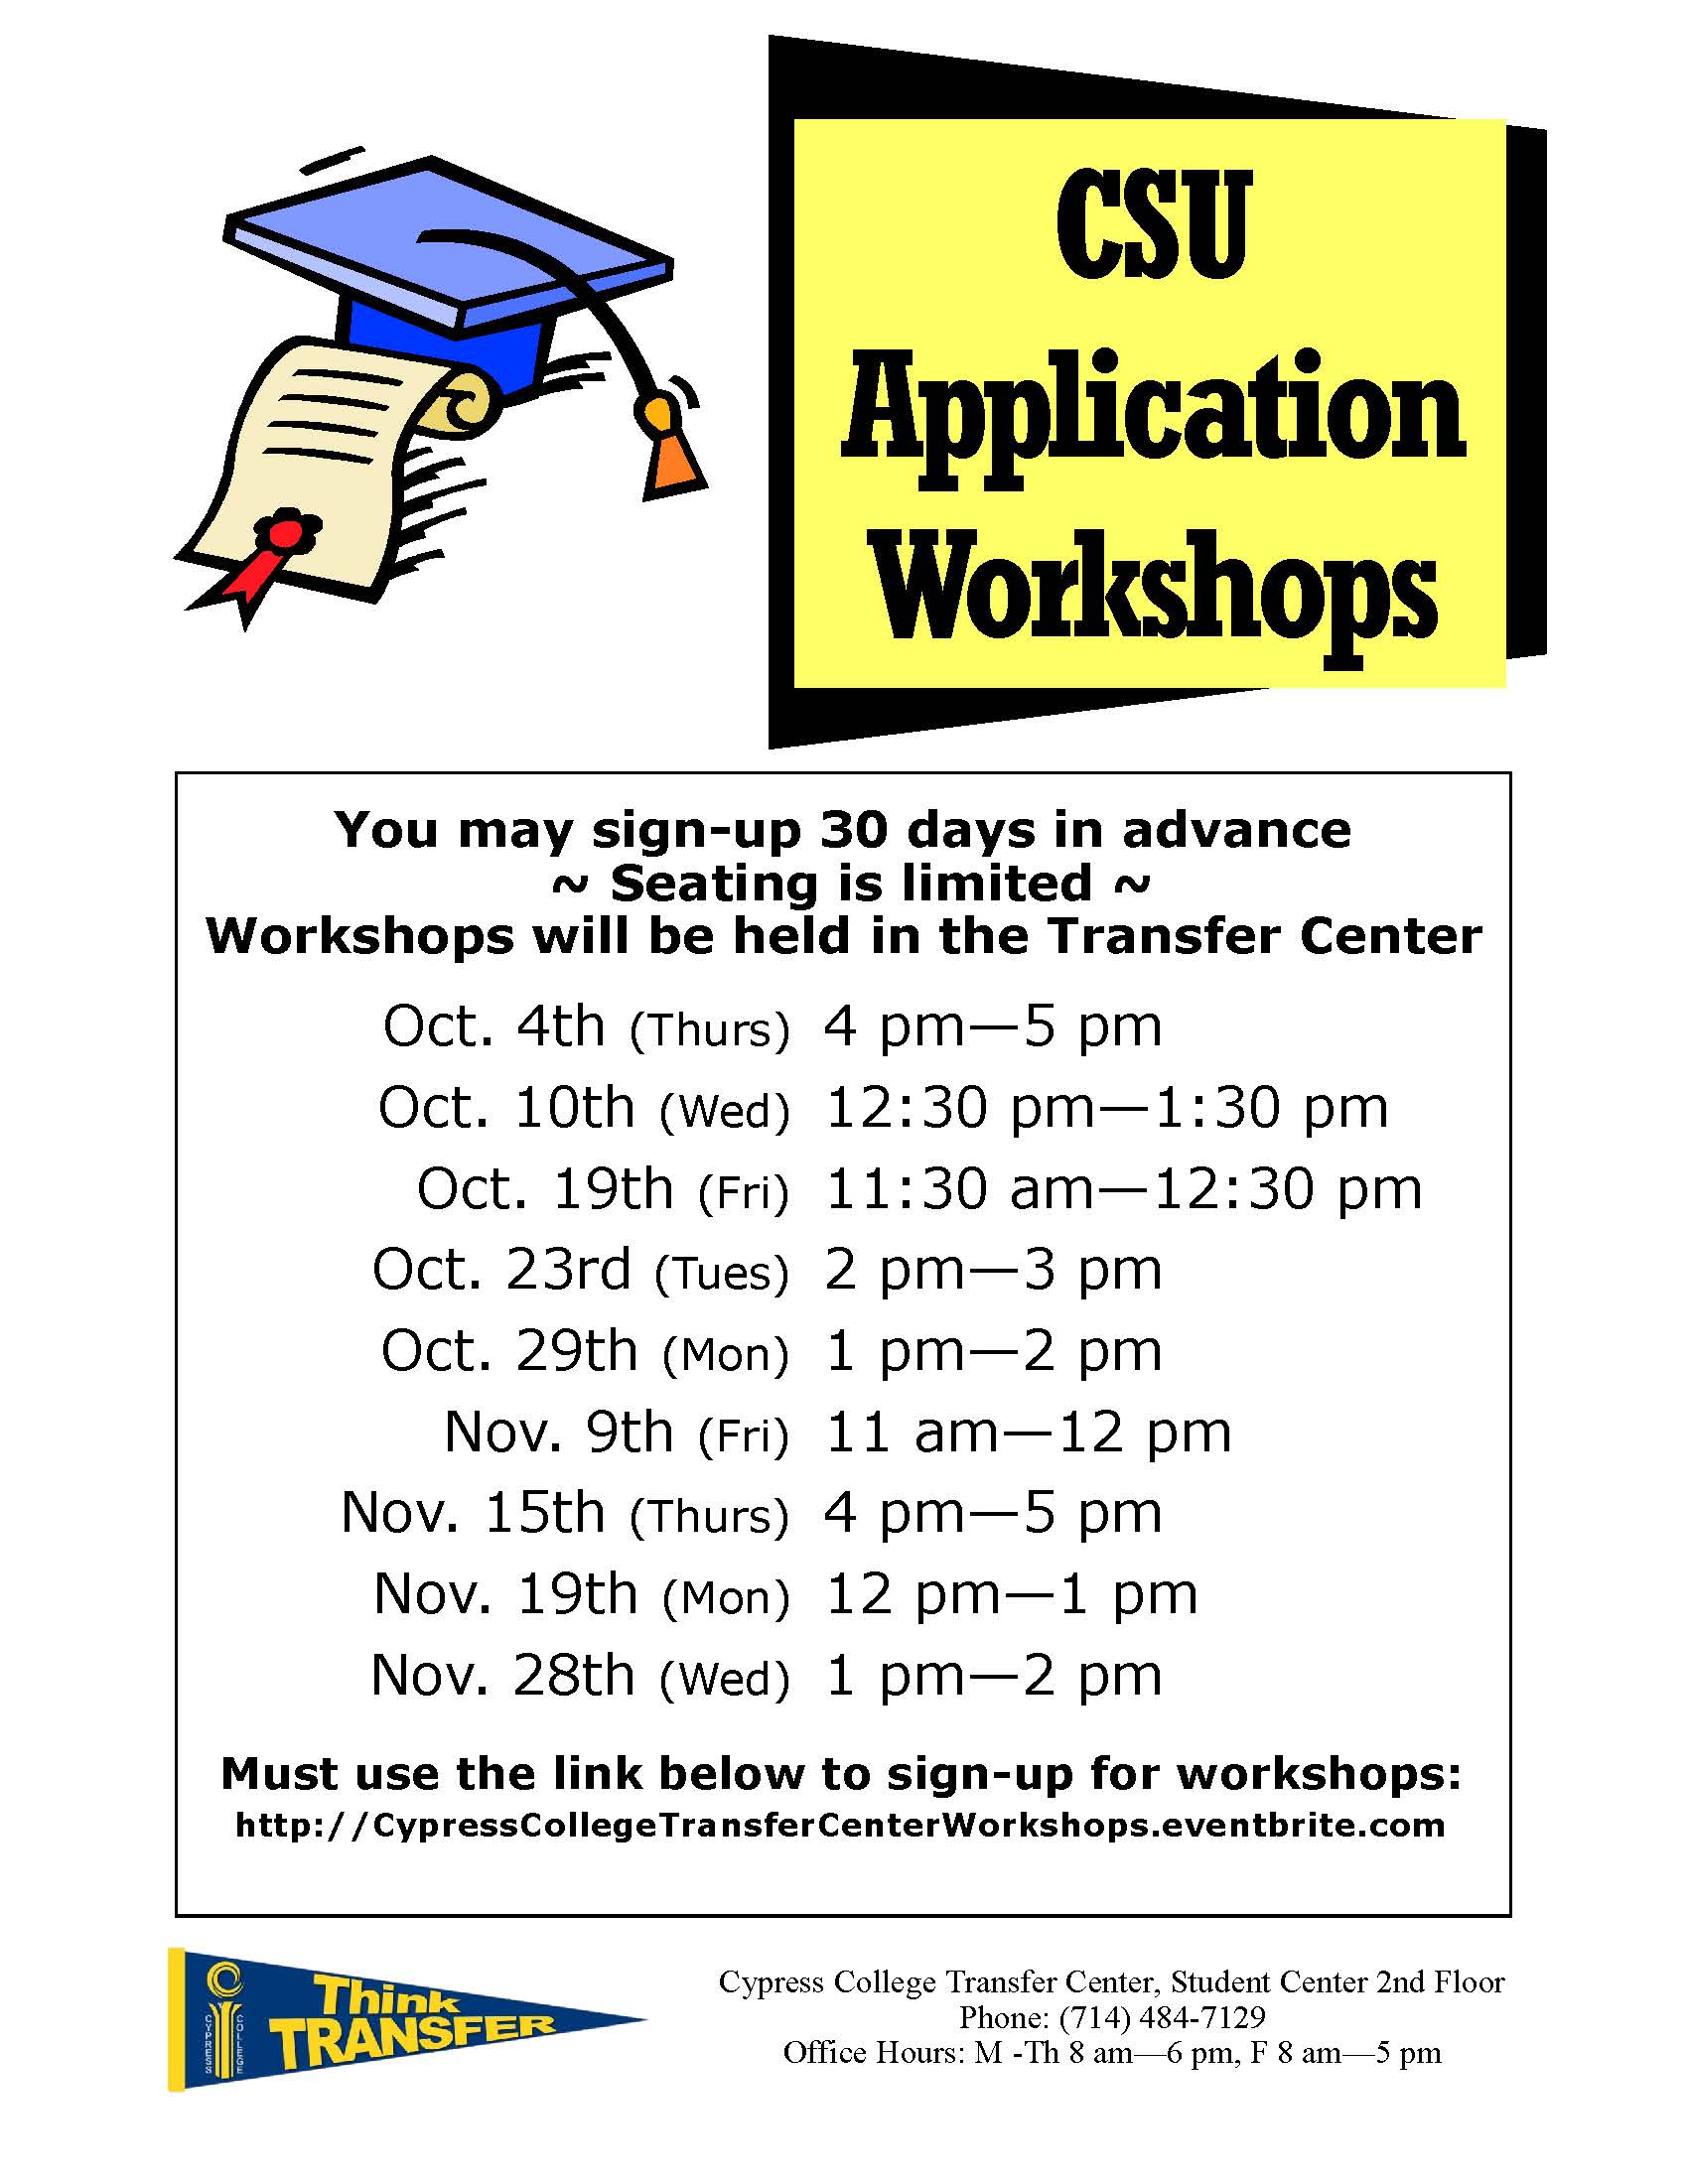 CSU Applications Workshops flyer.